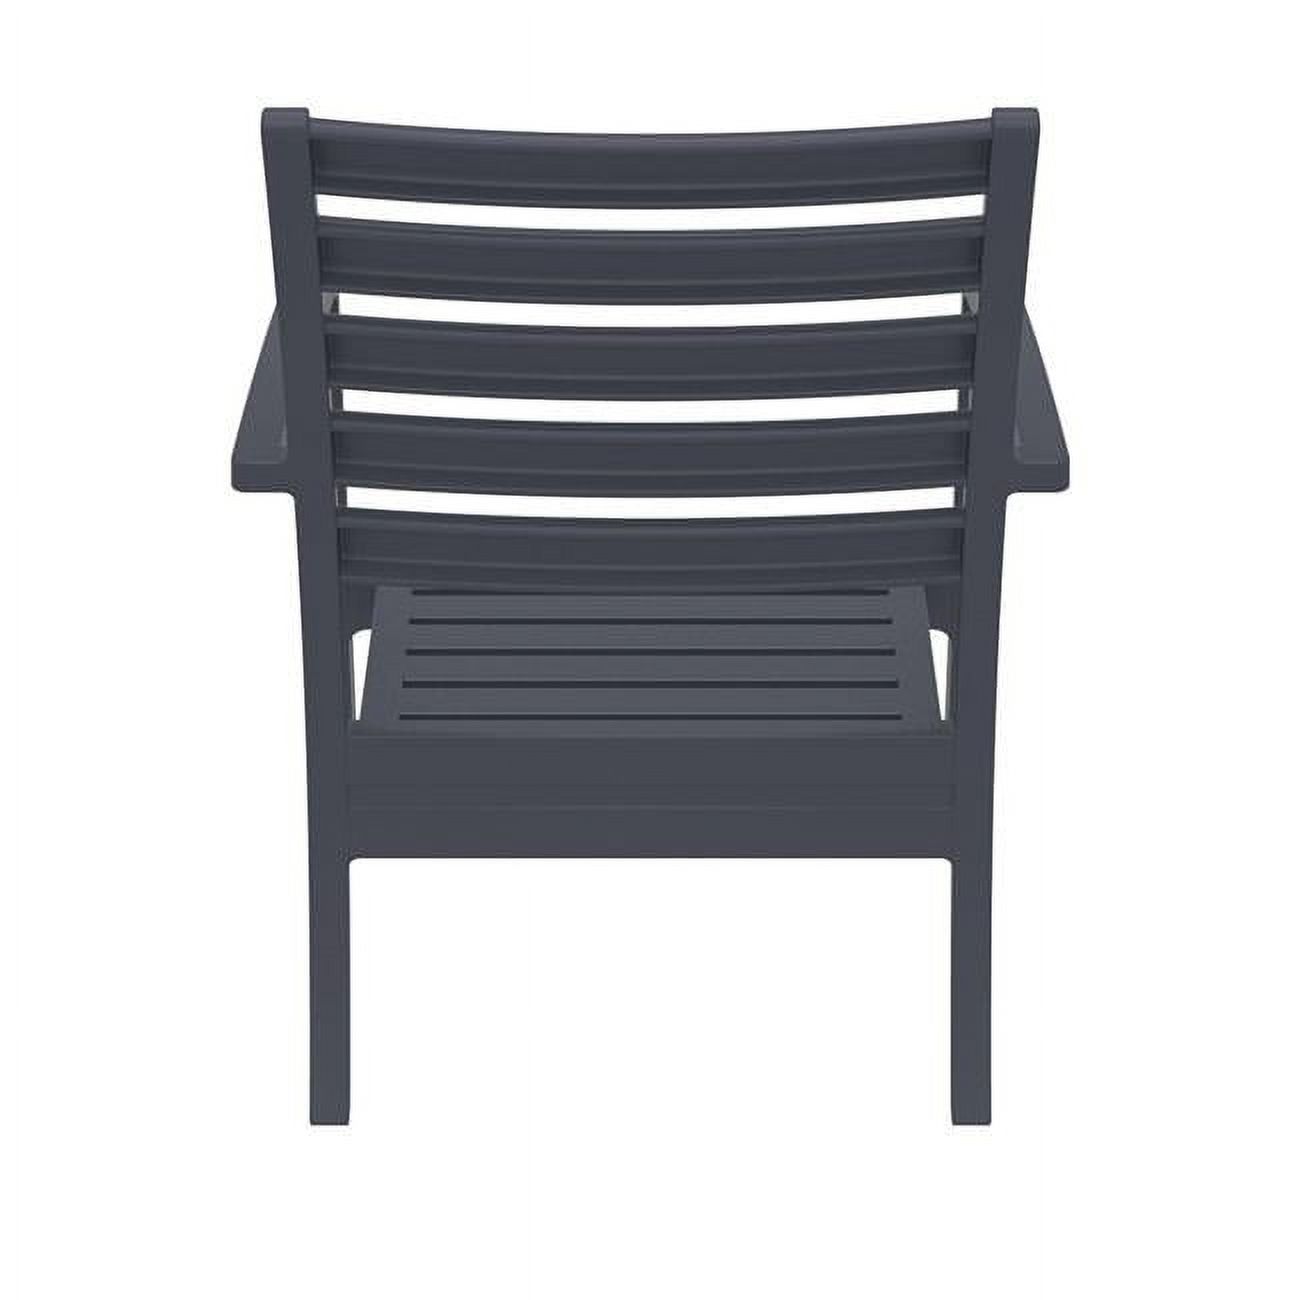 Siesta ISP004-DGR-CNA Artemis XL Outdoor Club Chair with Sunbrella Natural Cushion - Dark Gray -  set of 2 - image 1 of 8